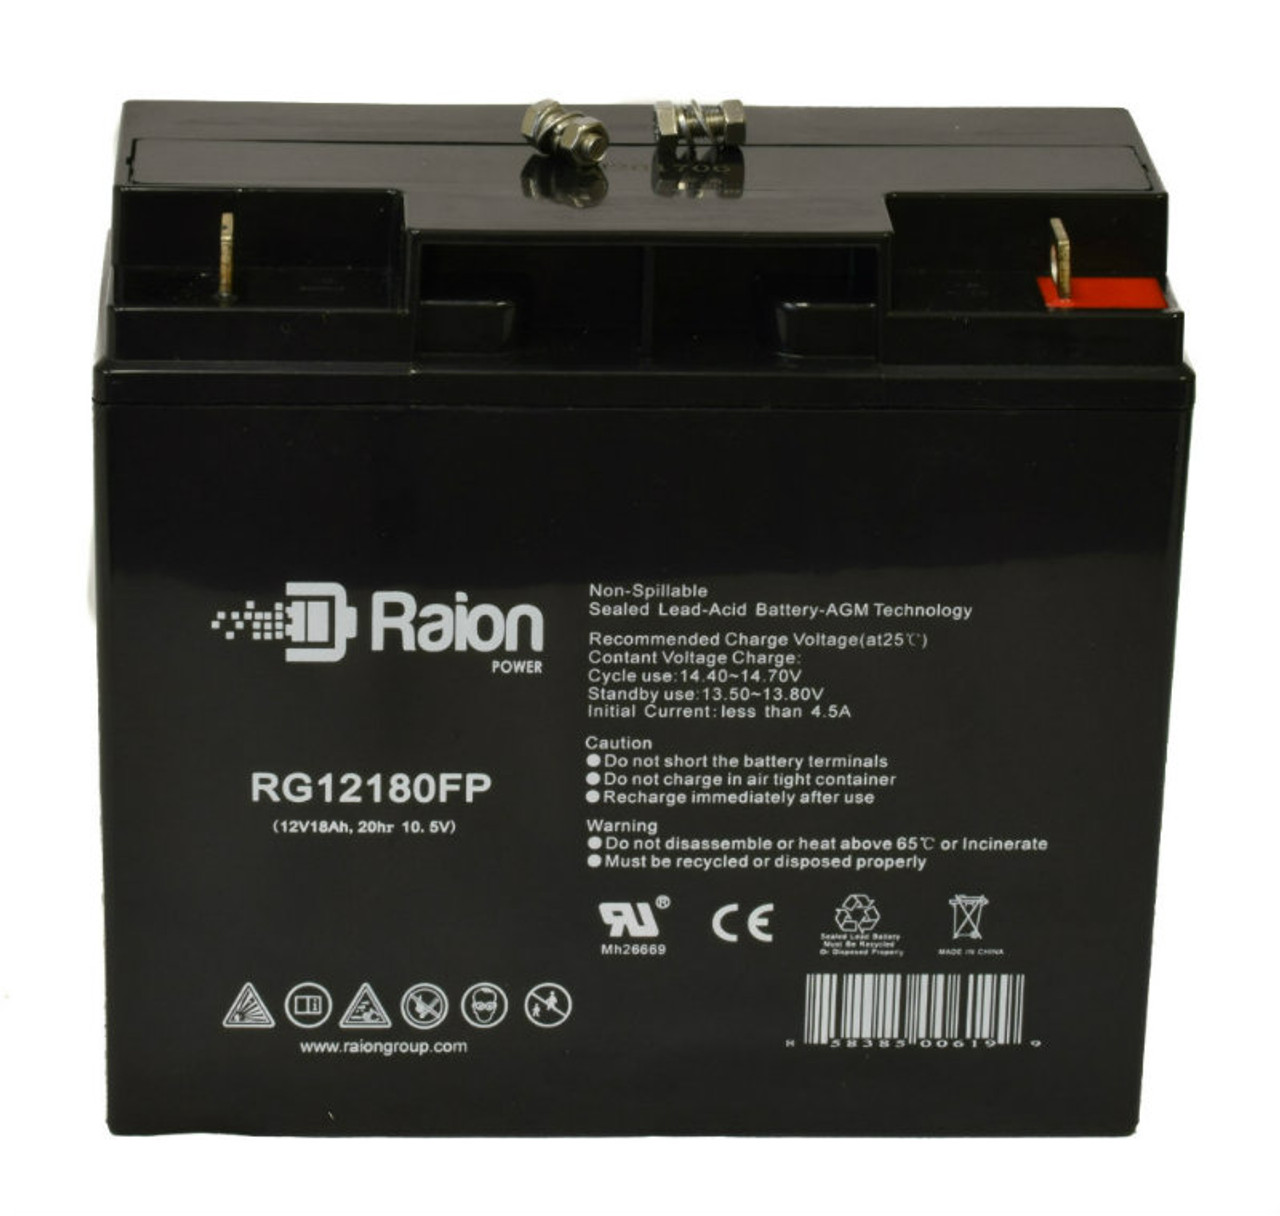 Raion Power RG12180FP 12V 18Ah Lead Acid Battery for Firman 10000 Watt H08051 Generator